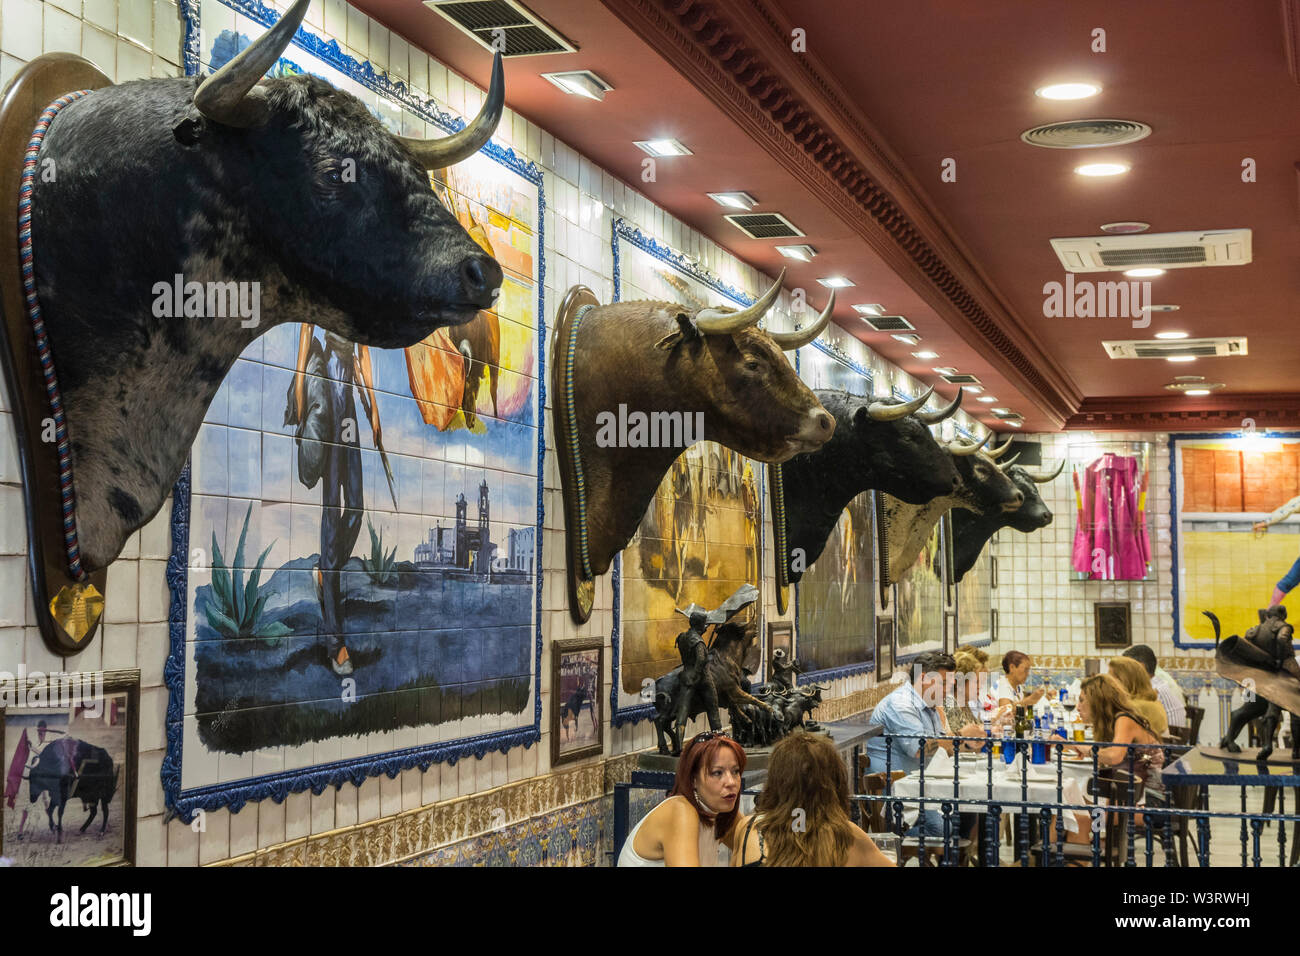 La Taurina, a bullfighting themed restaurant in the Carrera de San Jeronimo, near the Puerta del Sol in the center of Madrid, Spain Stock Photo